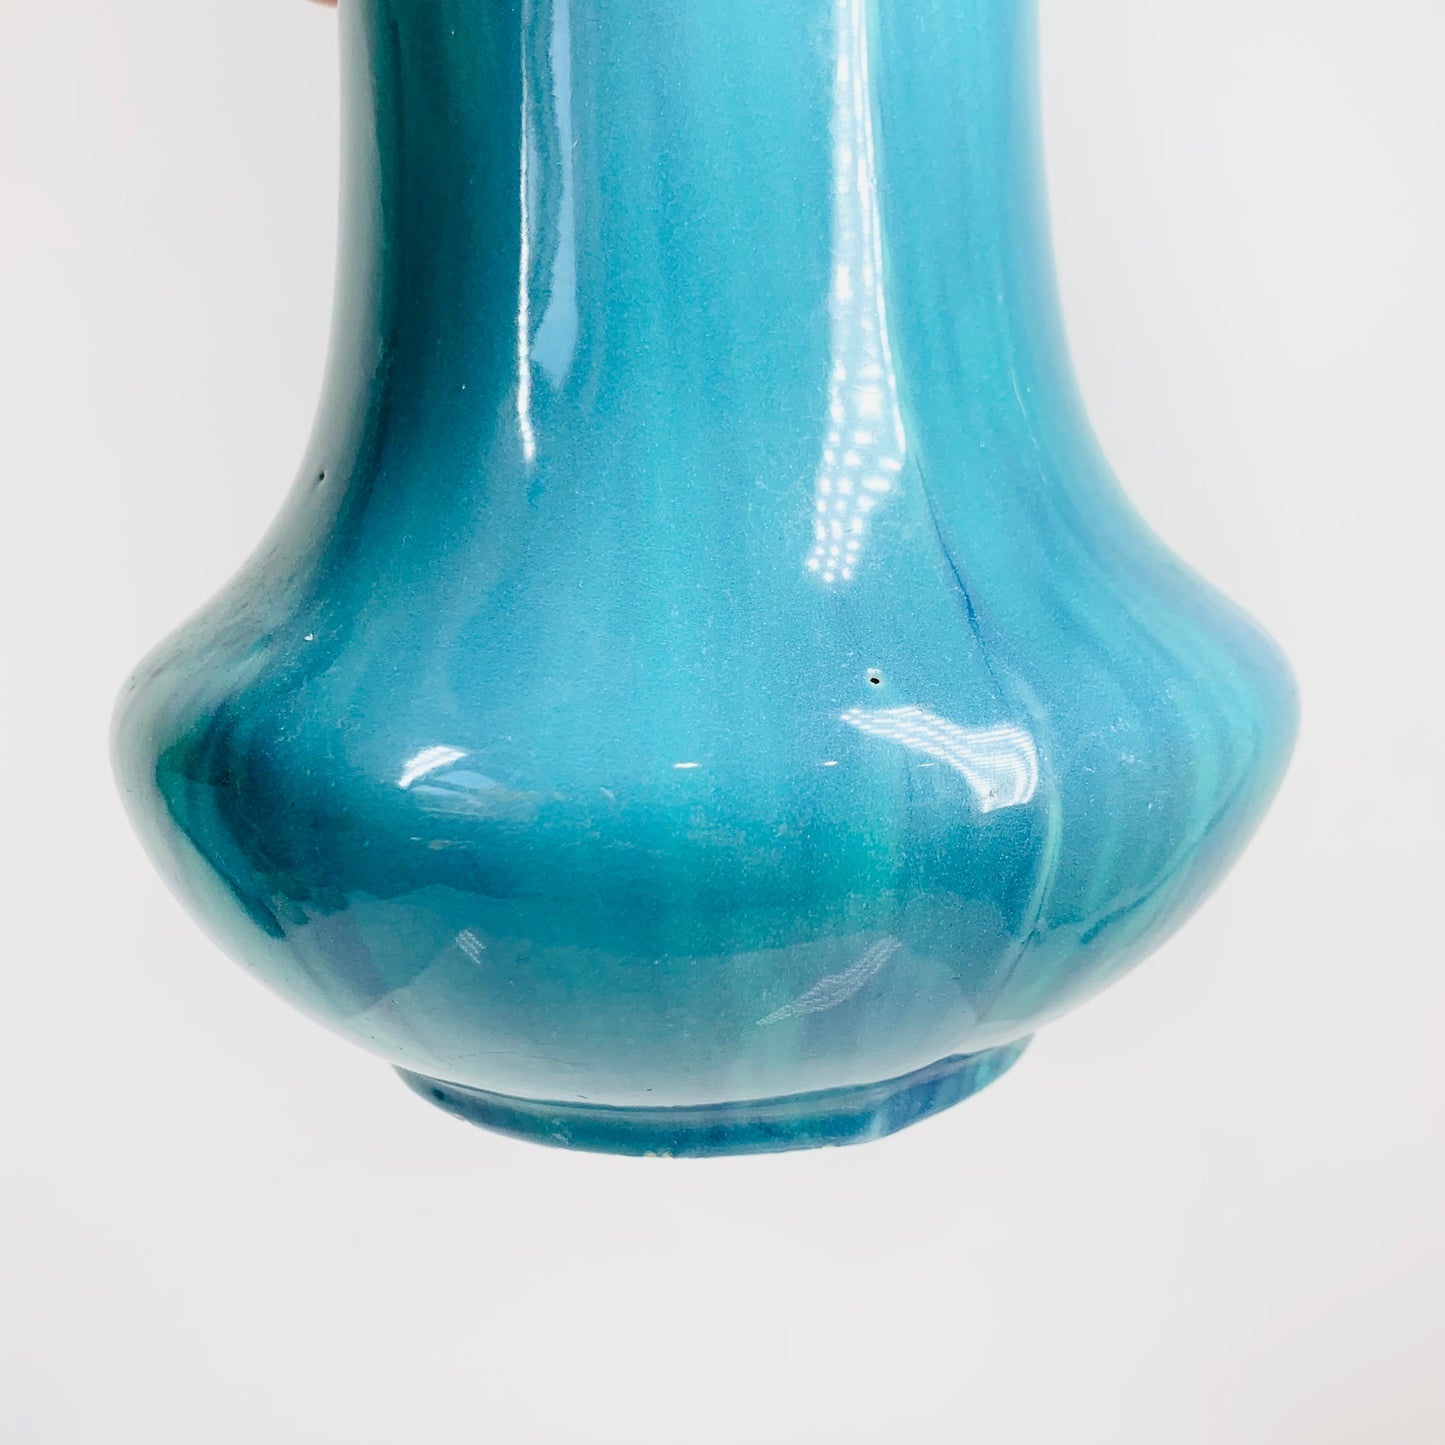 1970s turquoise flambé glazed pottery vase